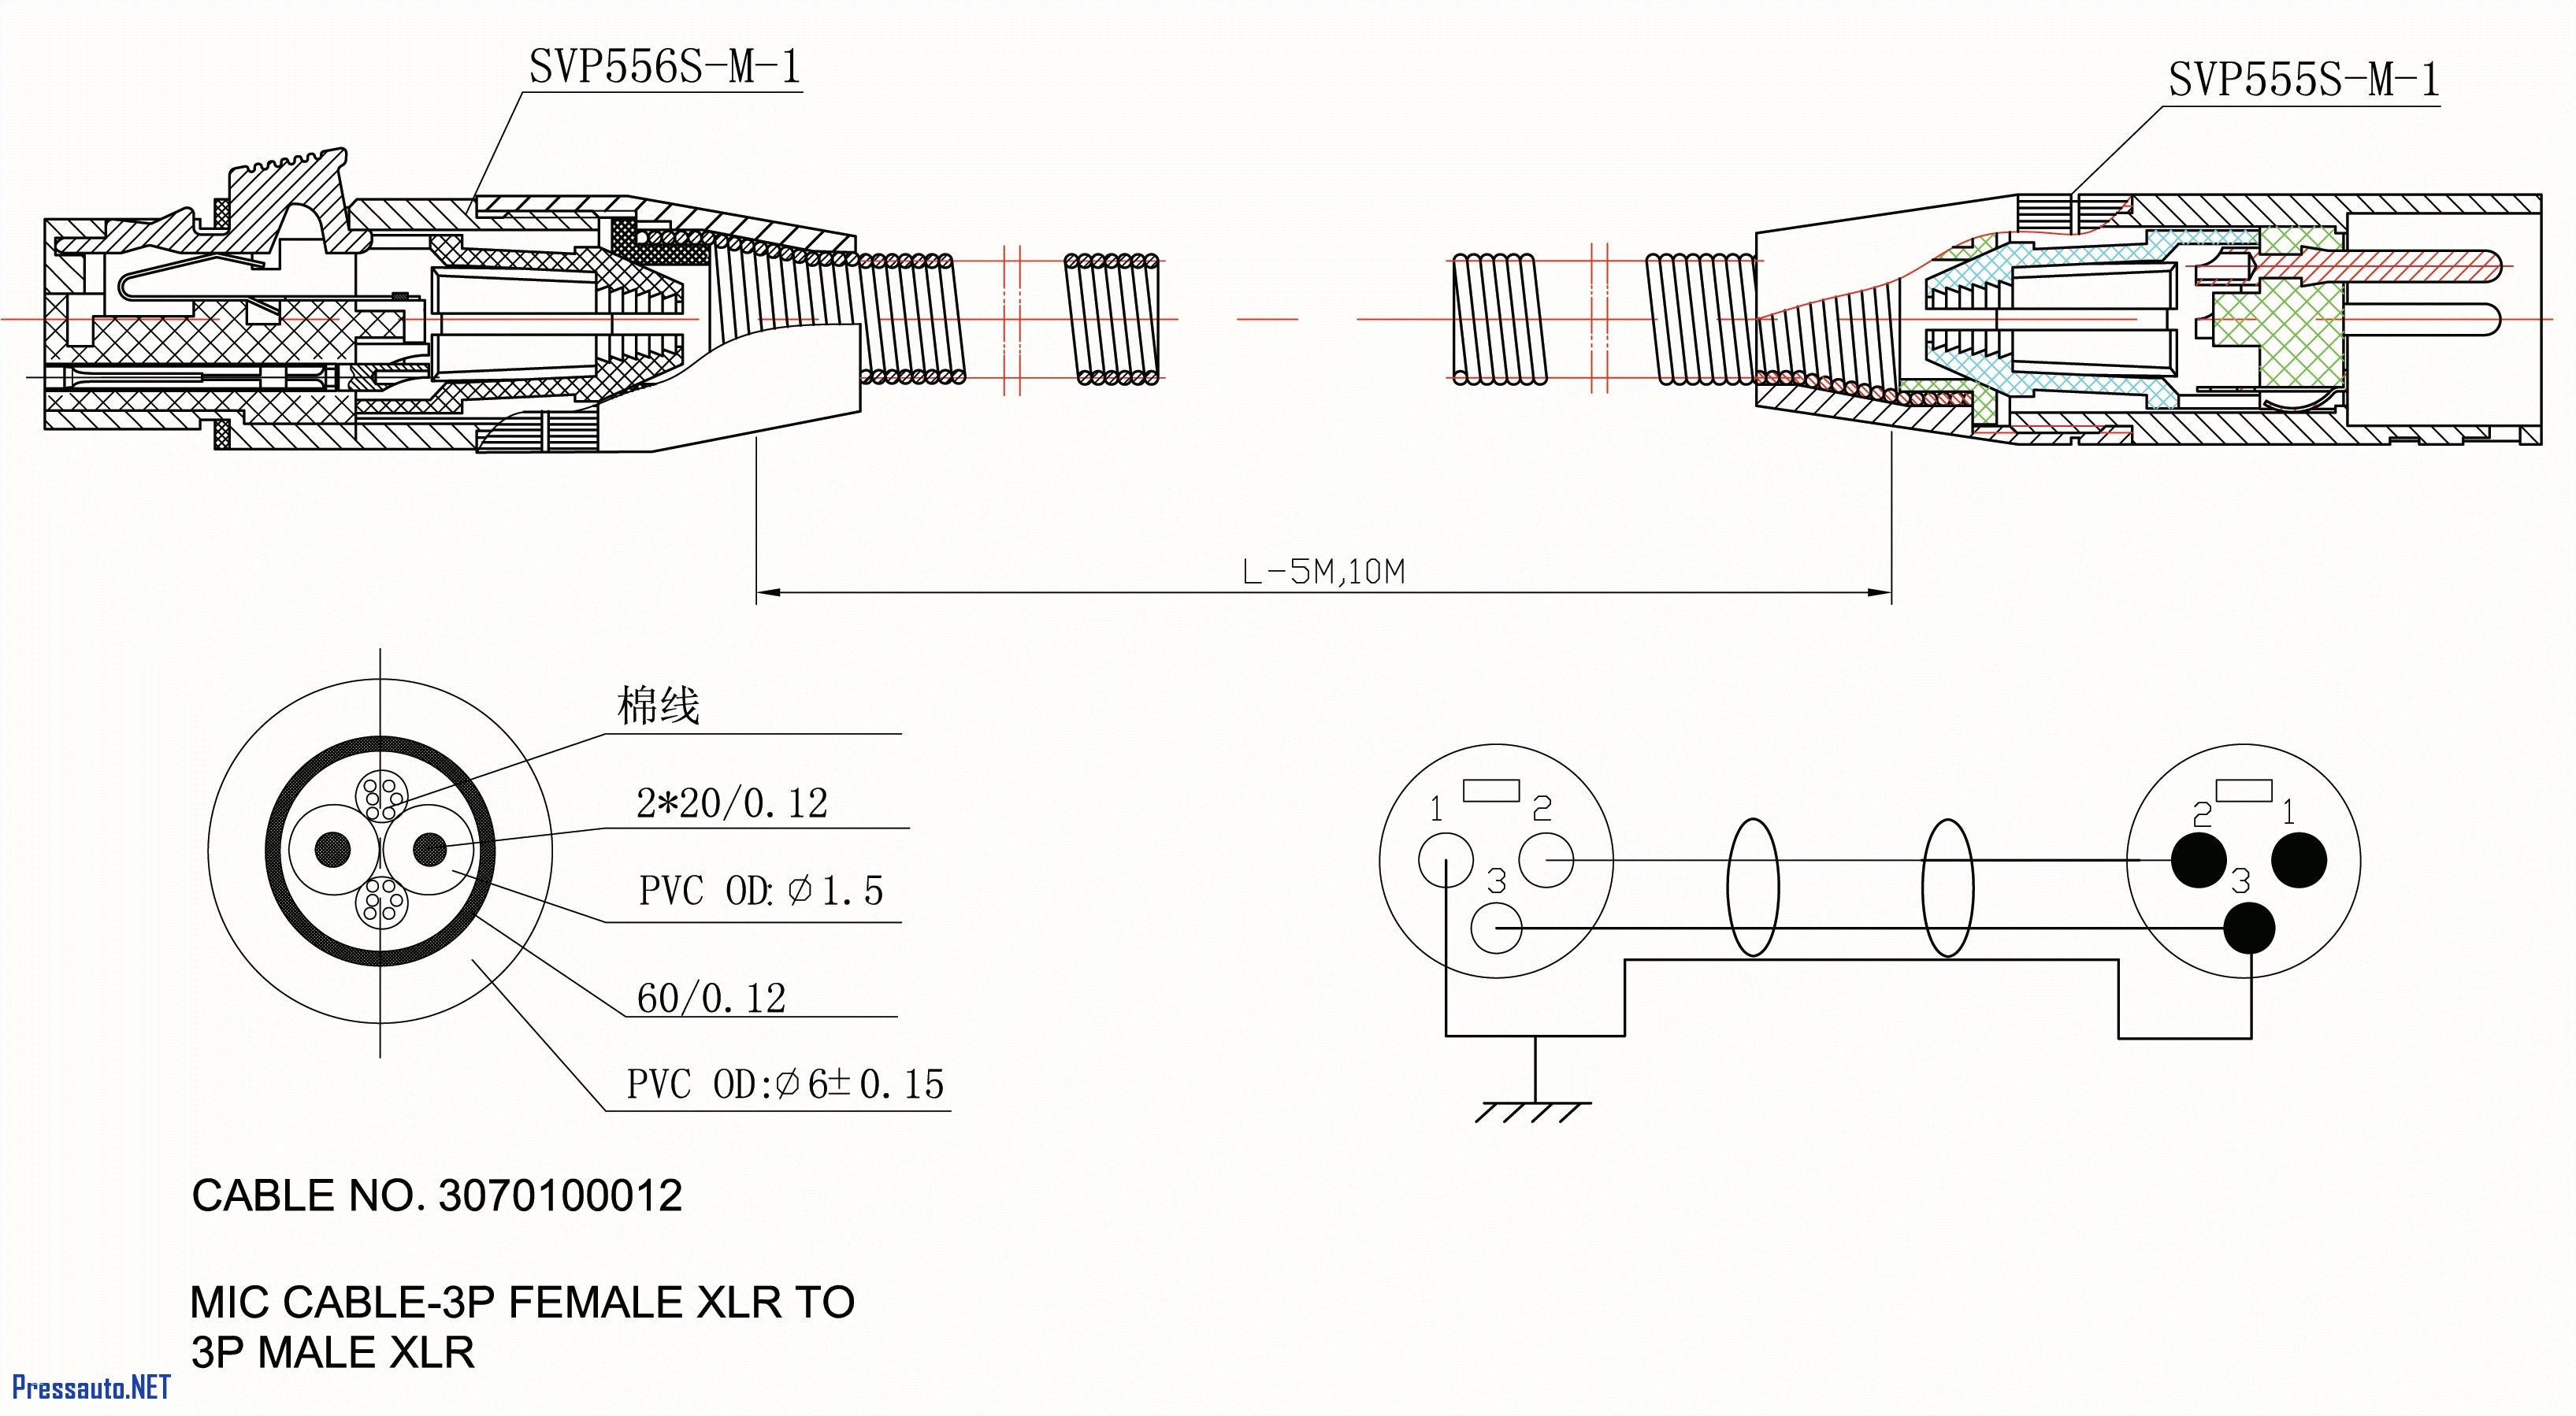 md6 wiring diagram wiring diagram autovehiclemd6 wiring diagram data diagram schematiclund boat wiring diagram wiring diagram